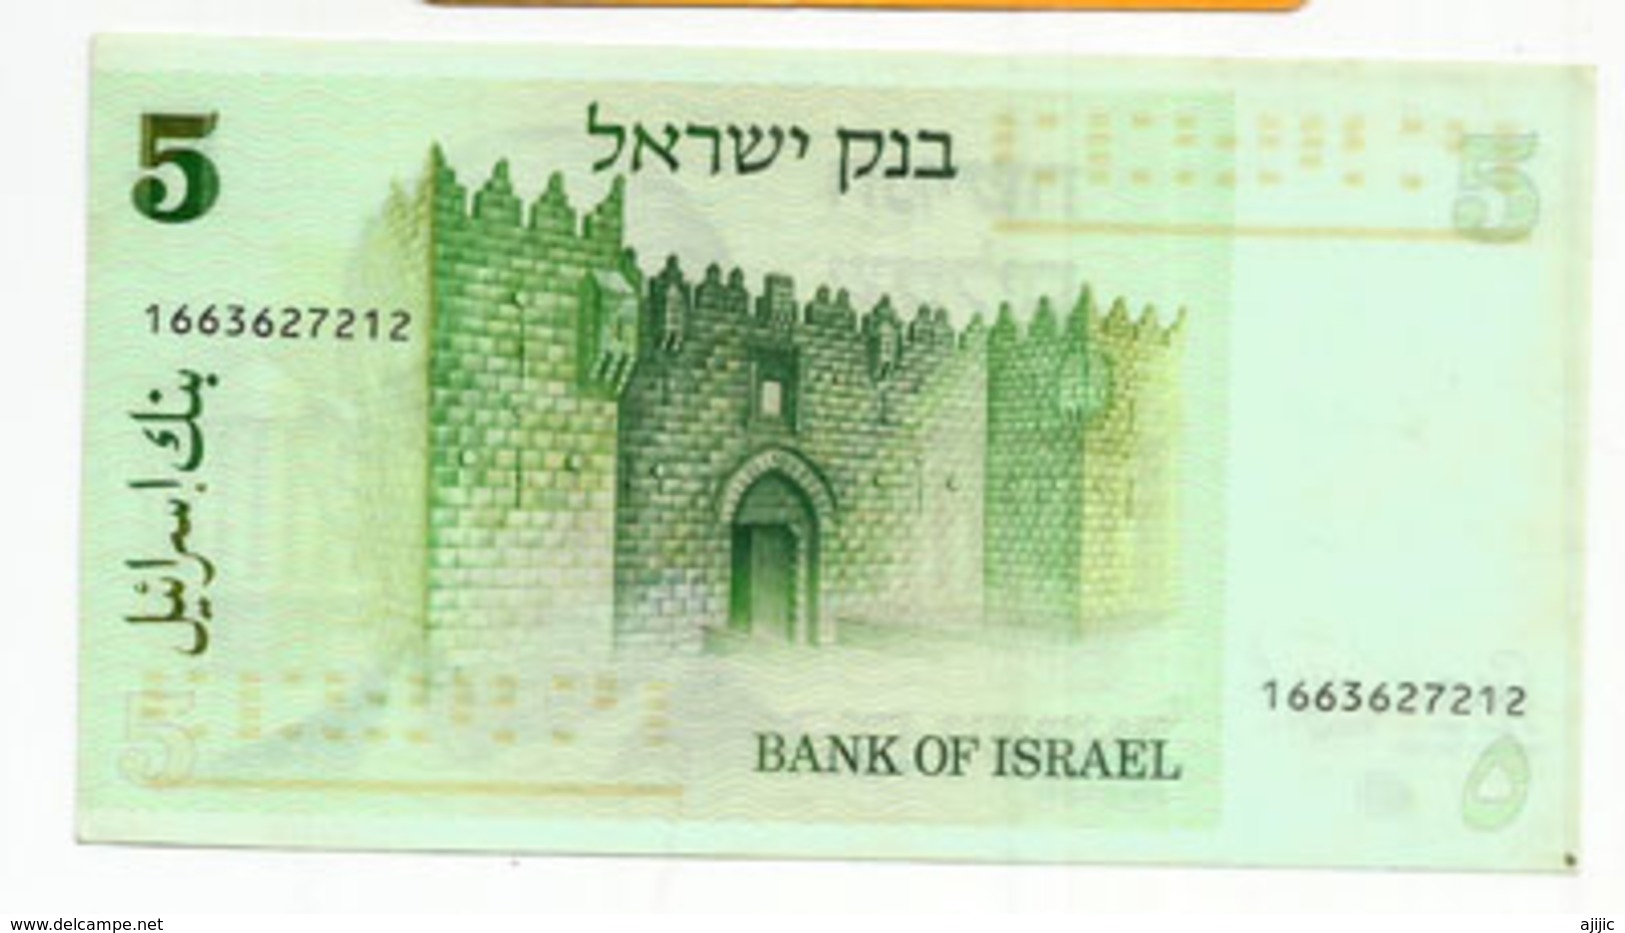 Israel 5 Sheqalim. 1978 Unc. Banknote - Israel